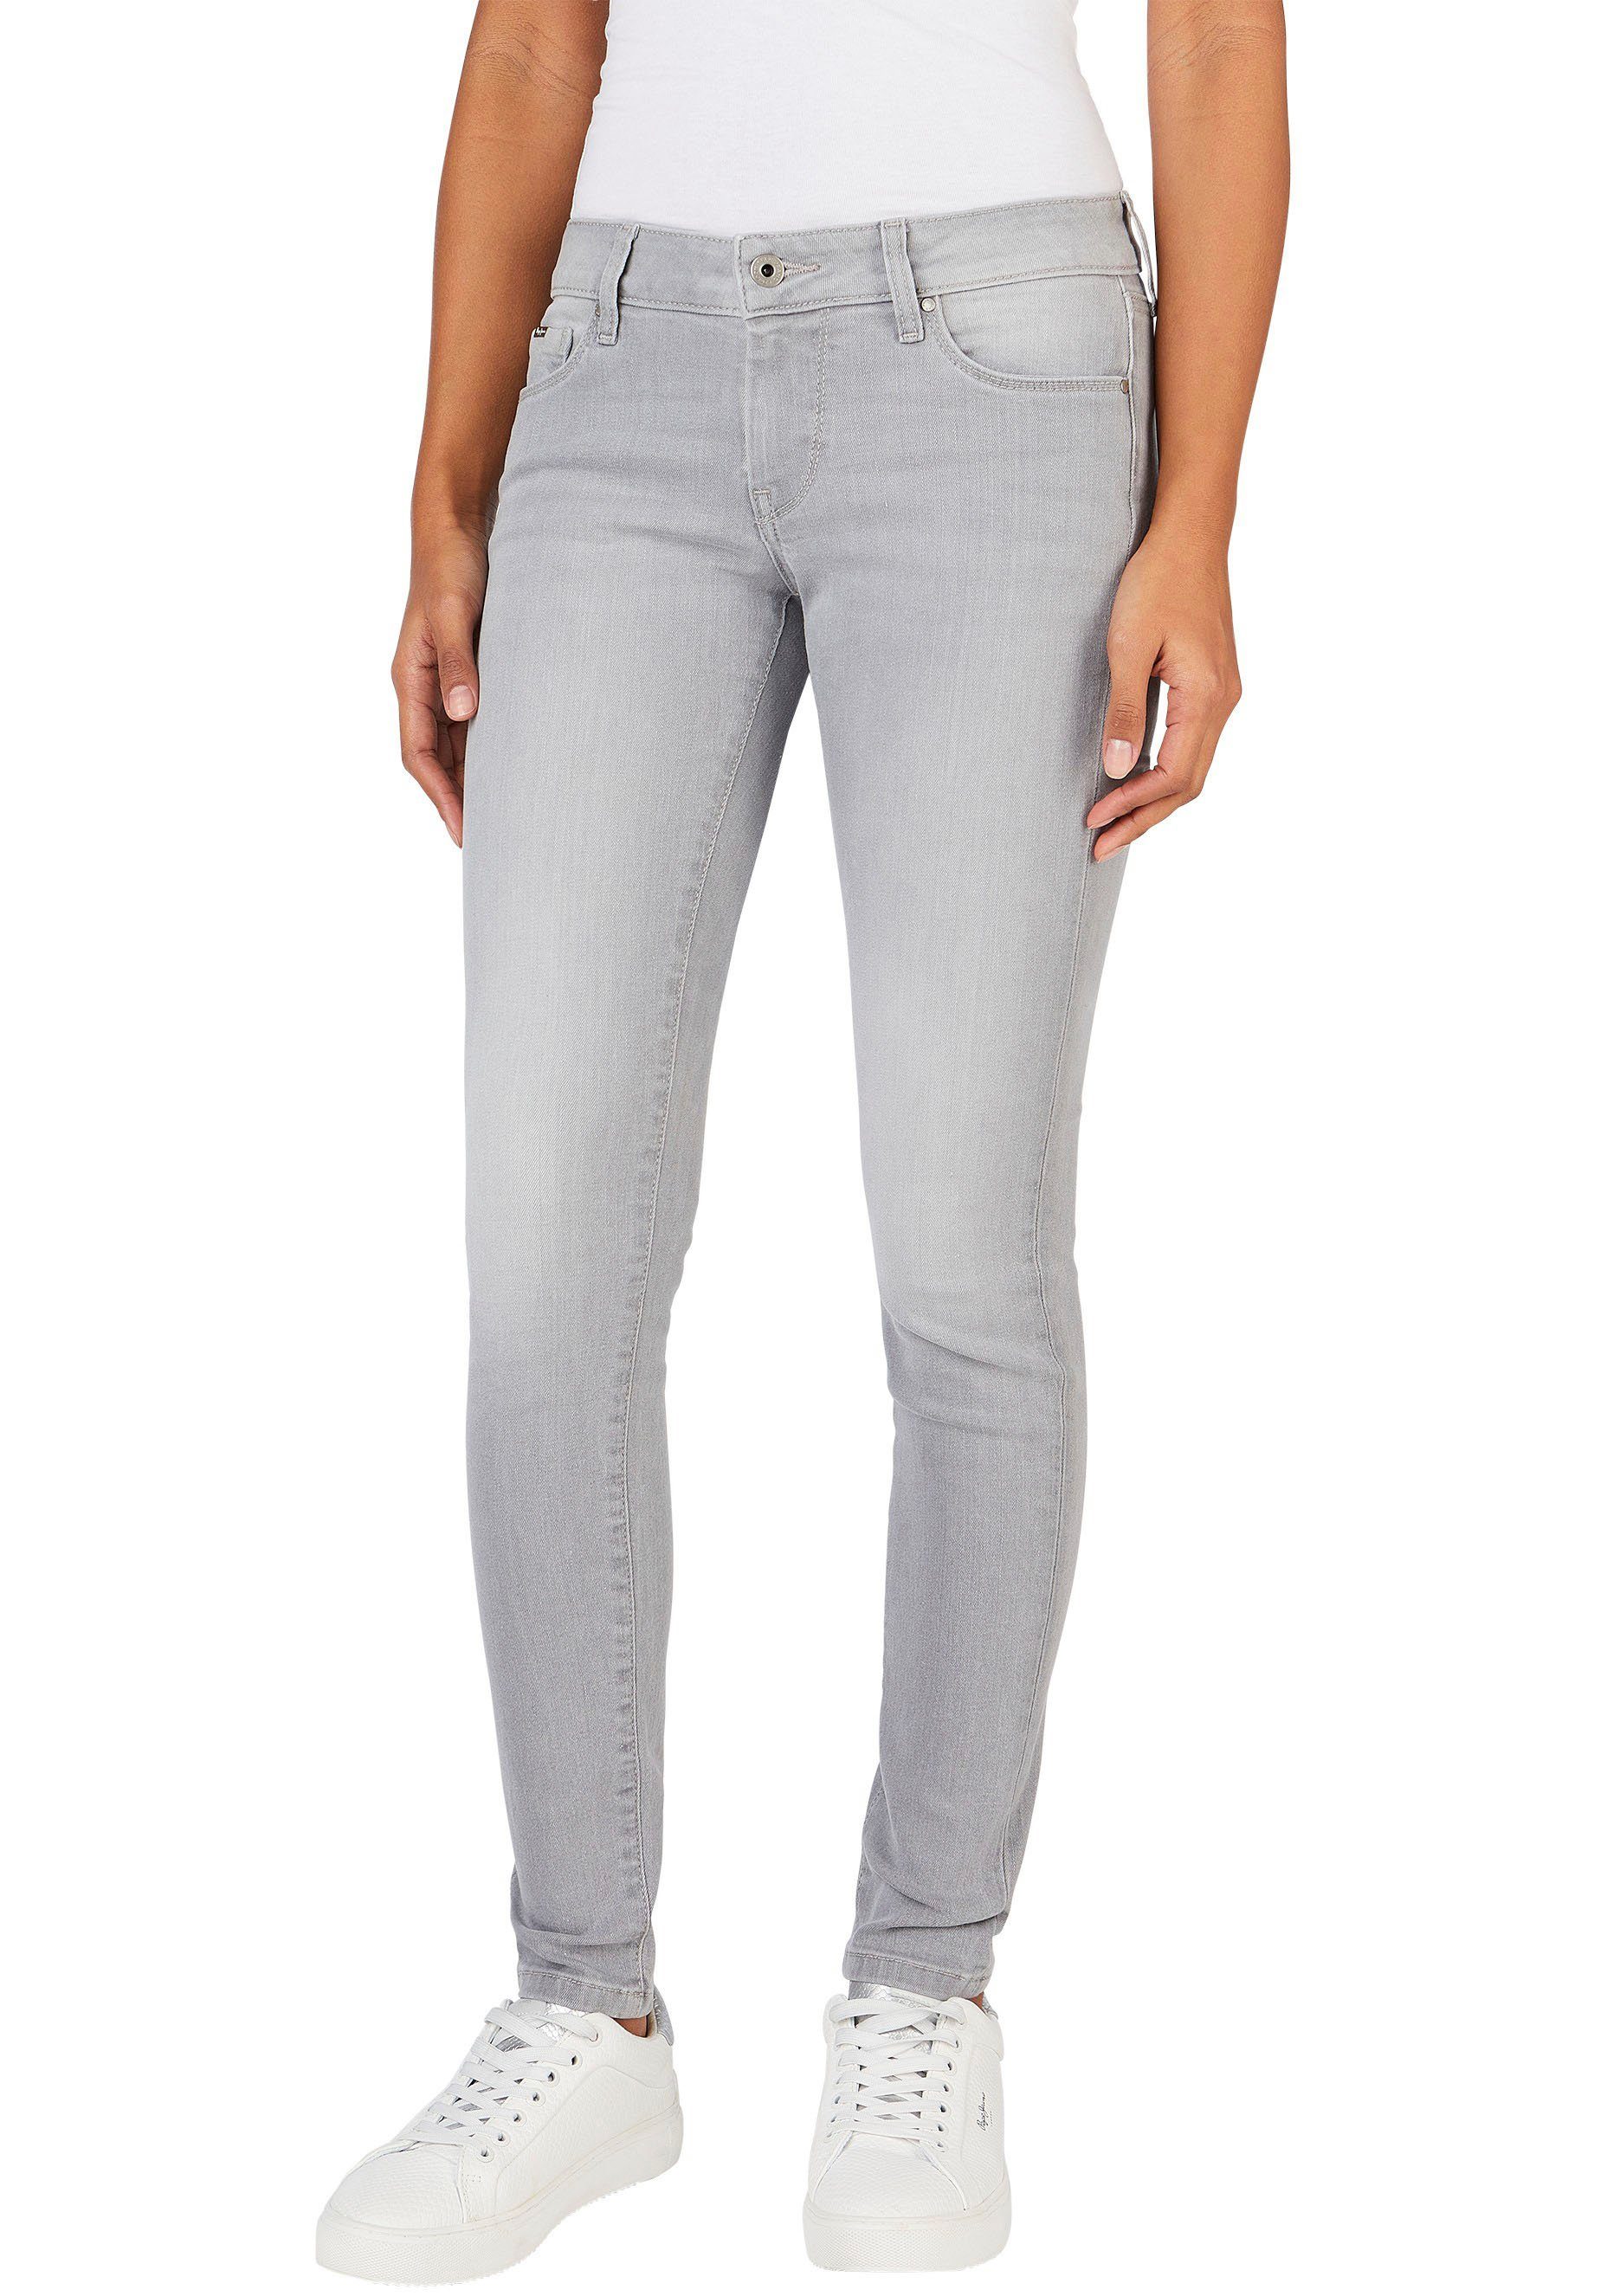 Pepe Jeans Skinny-fit-Jeans SOHO im 5-Pocket-Stil mit 1-Knopf Bund und Stretch-Anteil light grey